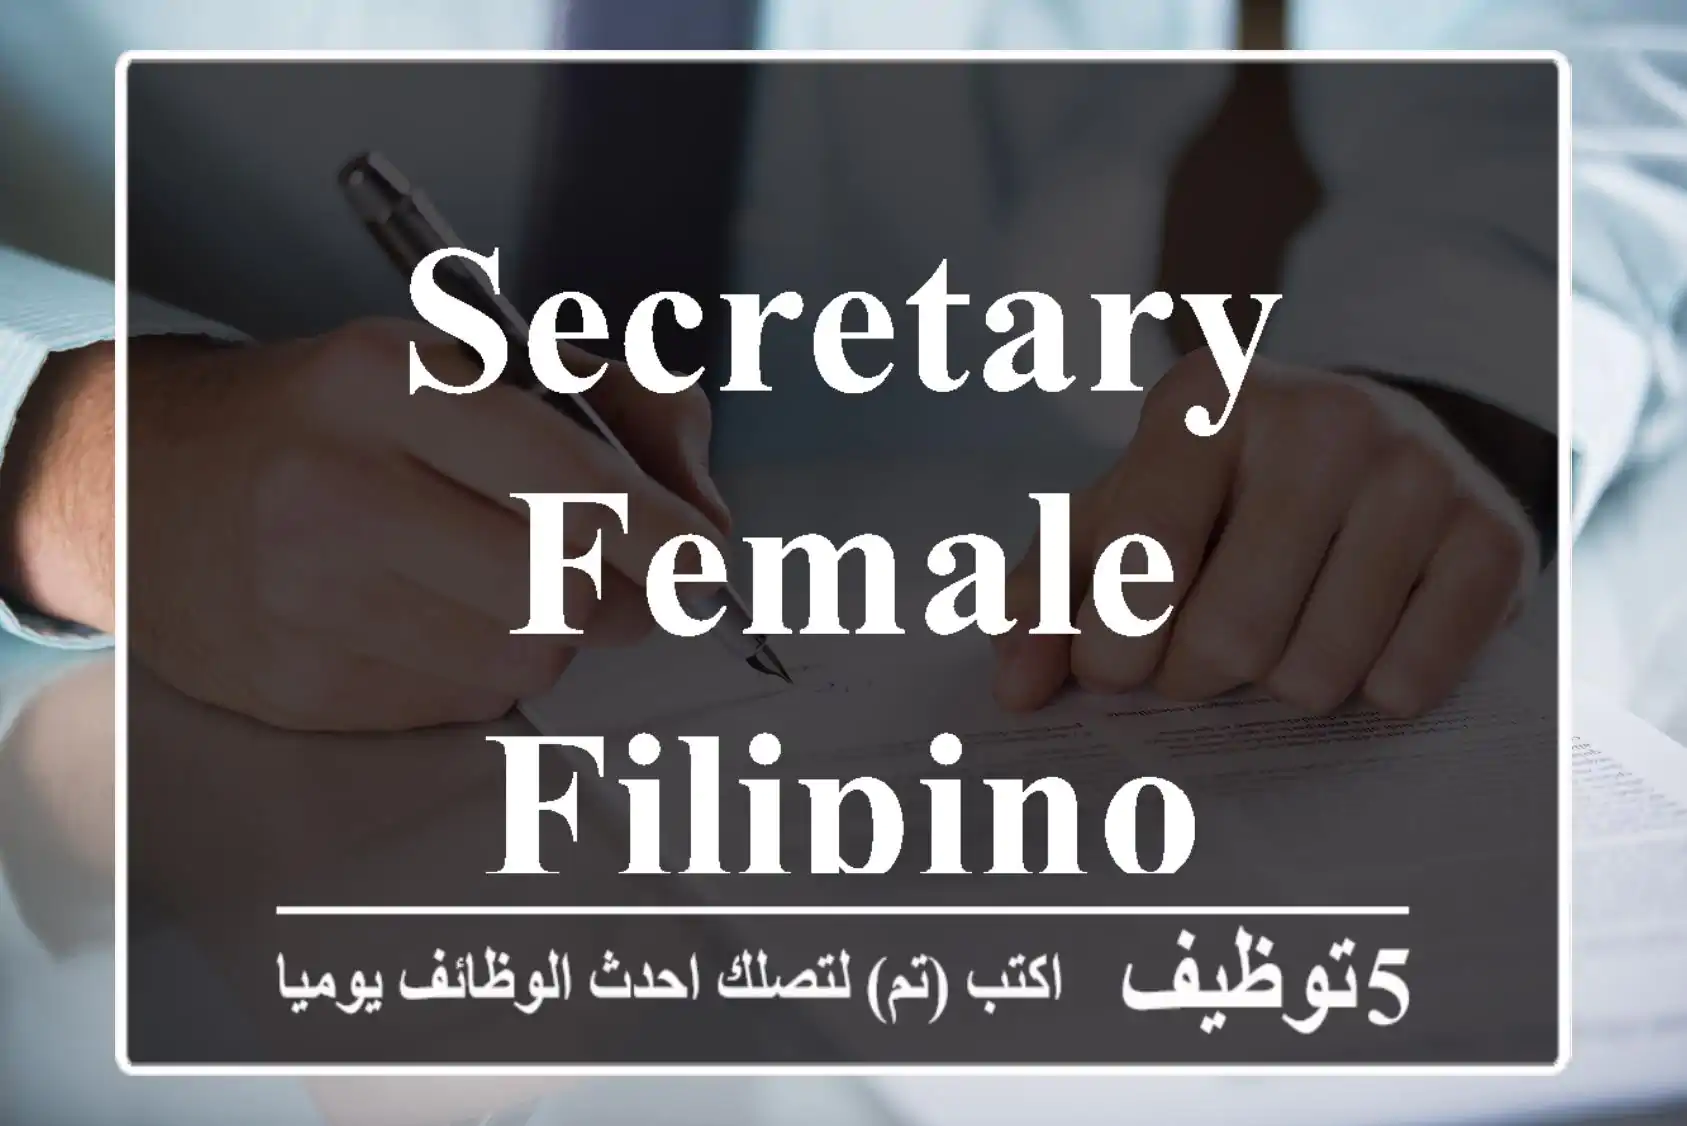 Secretary female Filipino